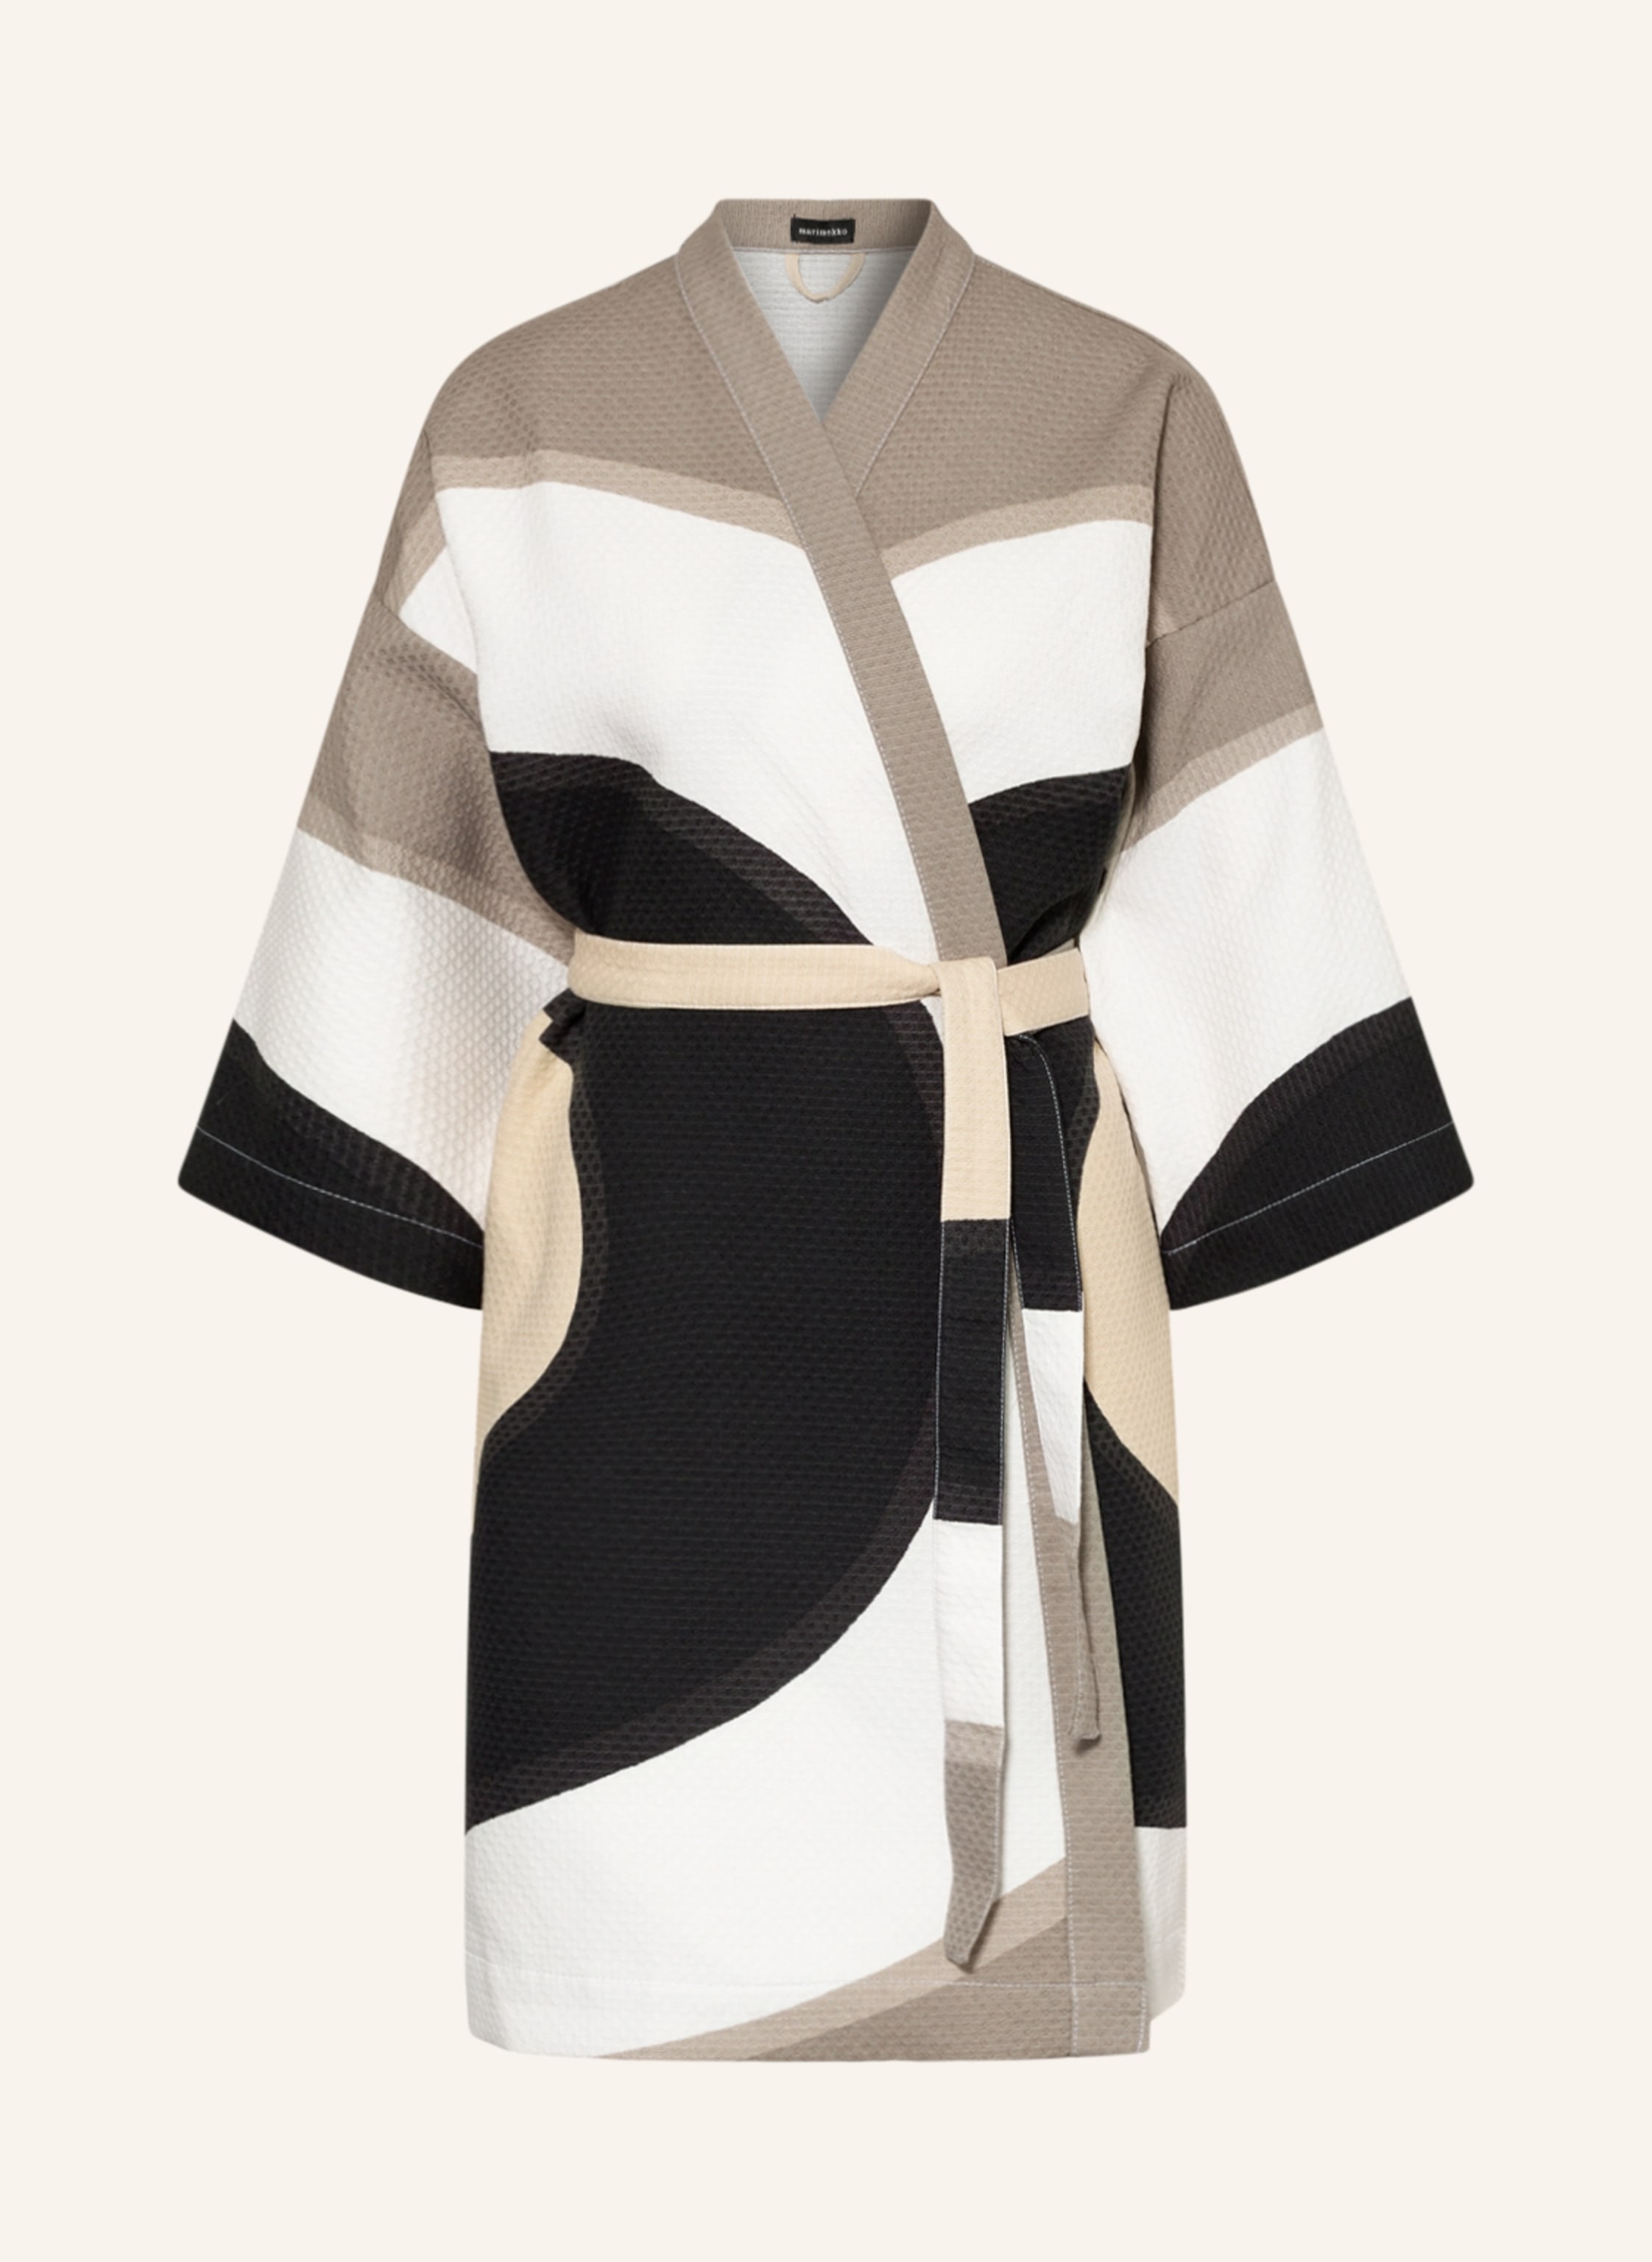 marimekko Unisex bathrobe MELOONI in taupe/ black/ beige | Breuninger